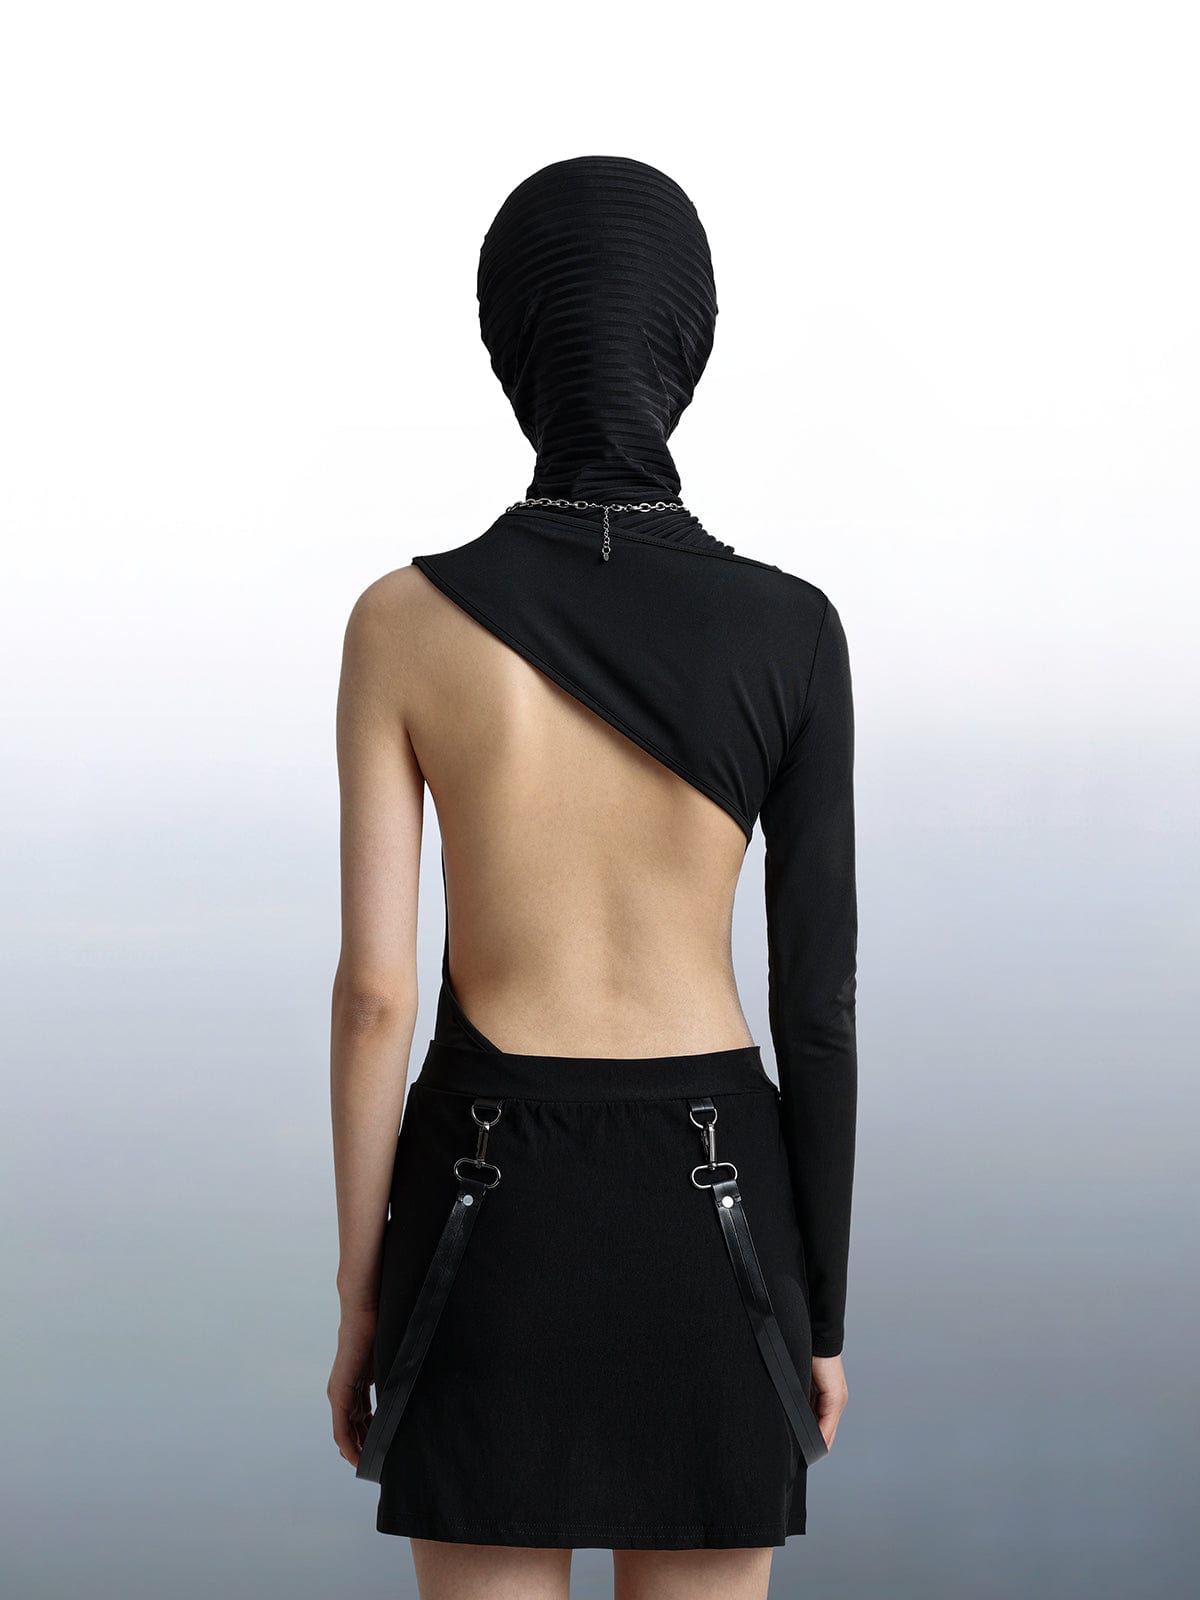 NEV Irregular Backless Bodysuit